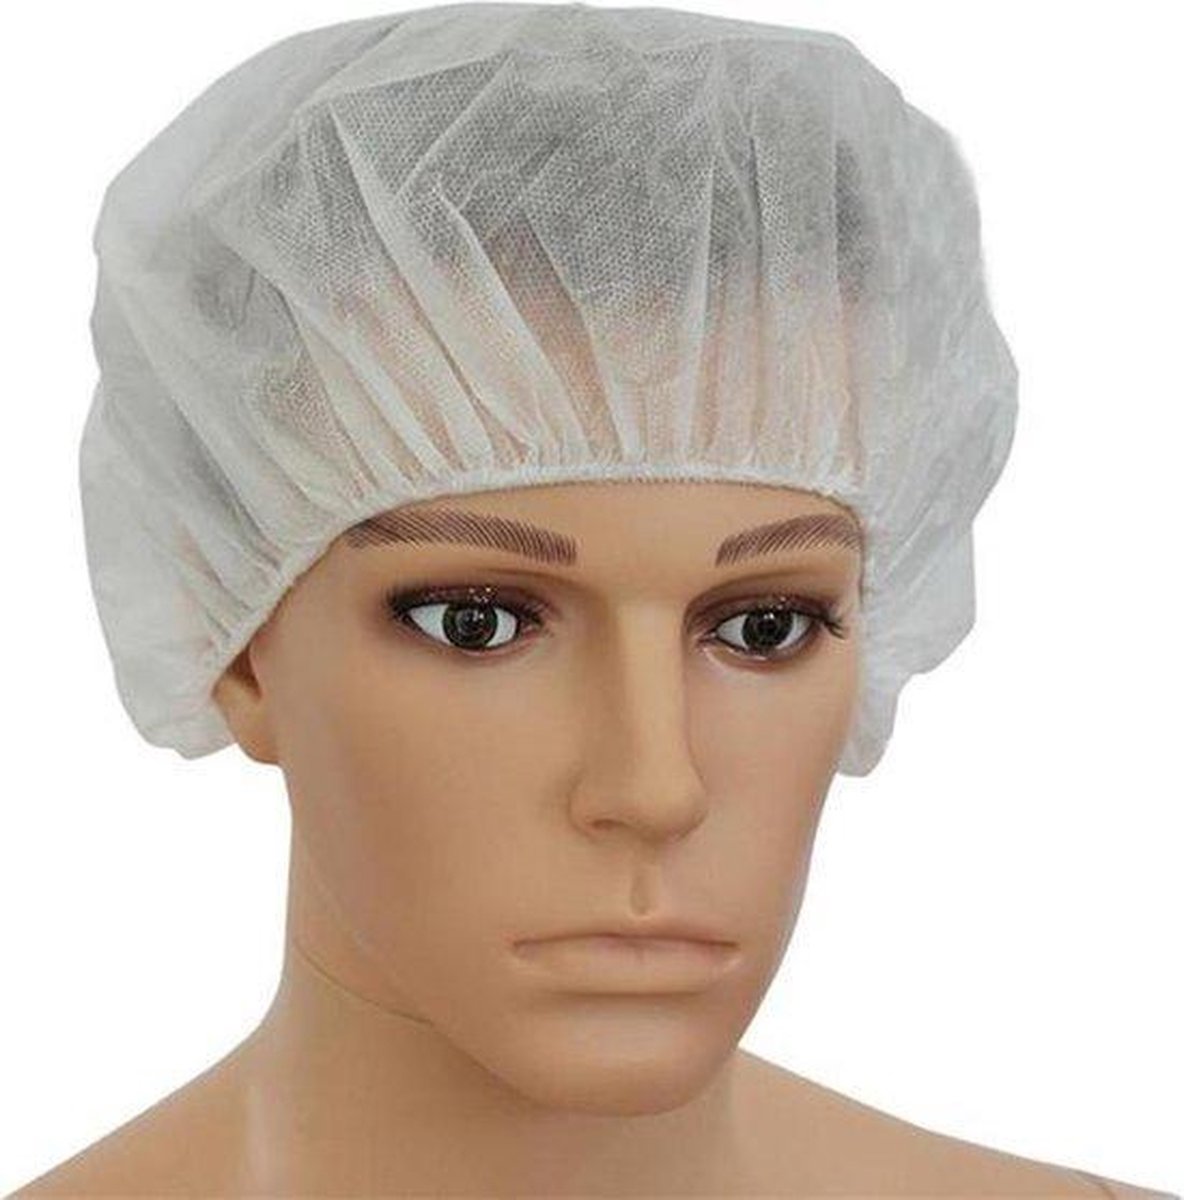 Wegwerp Haarnetje per 100 stuks wit - Medische Kwaliteit Haarnetjes Disposable Hairnet per 100 pieces white - Medical Quality Hairnets